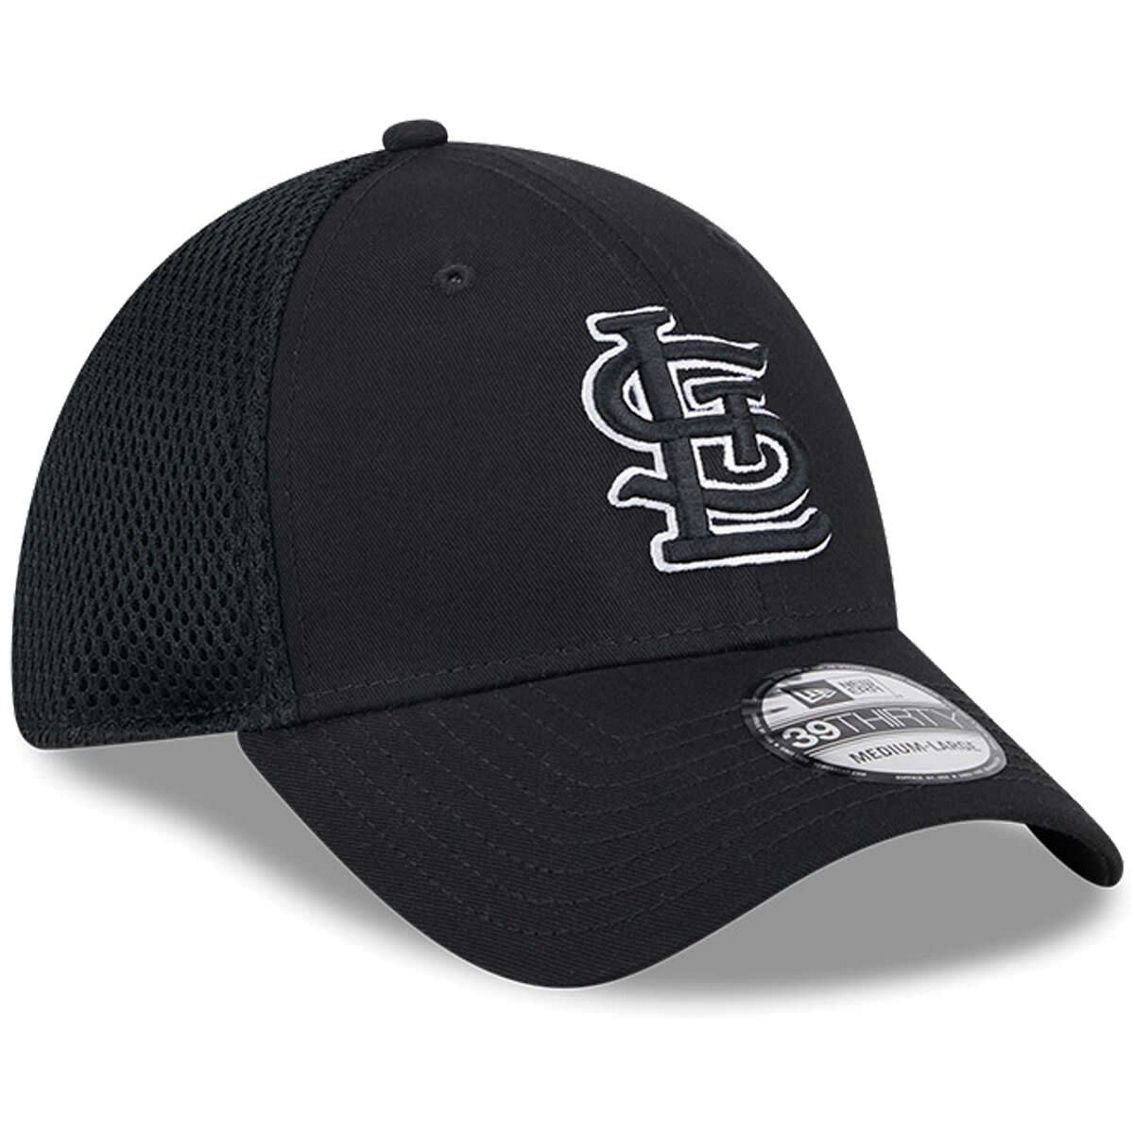 New Era Men's St. Louis Cardinals Evergreen Black & White Neo 39THIRTY Flex Hat - Image 4 of 4